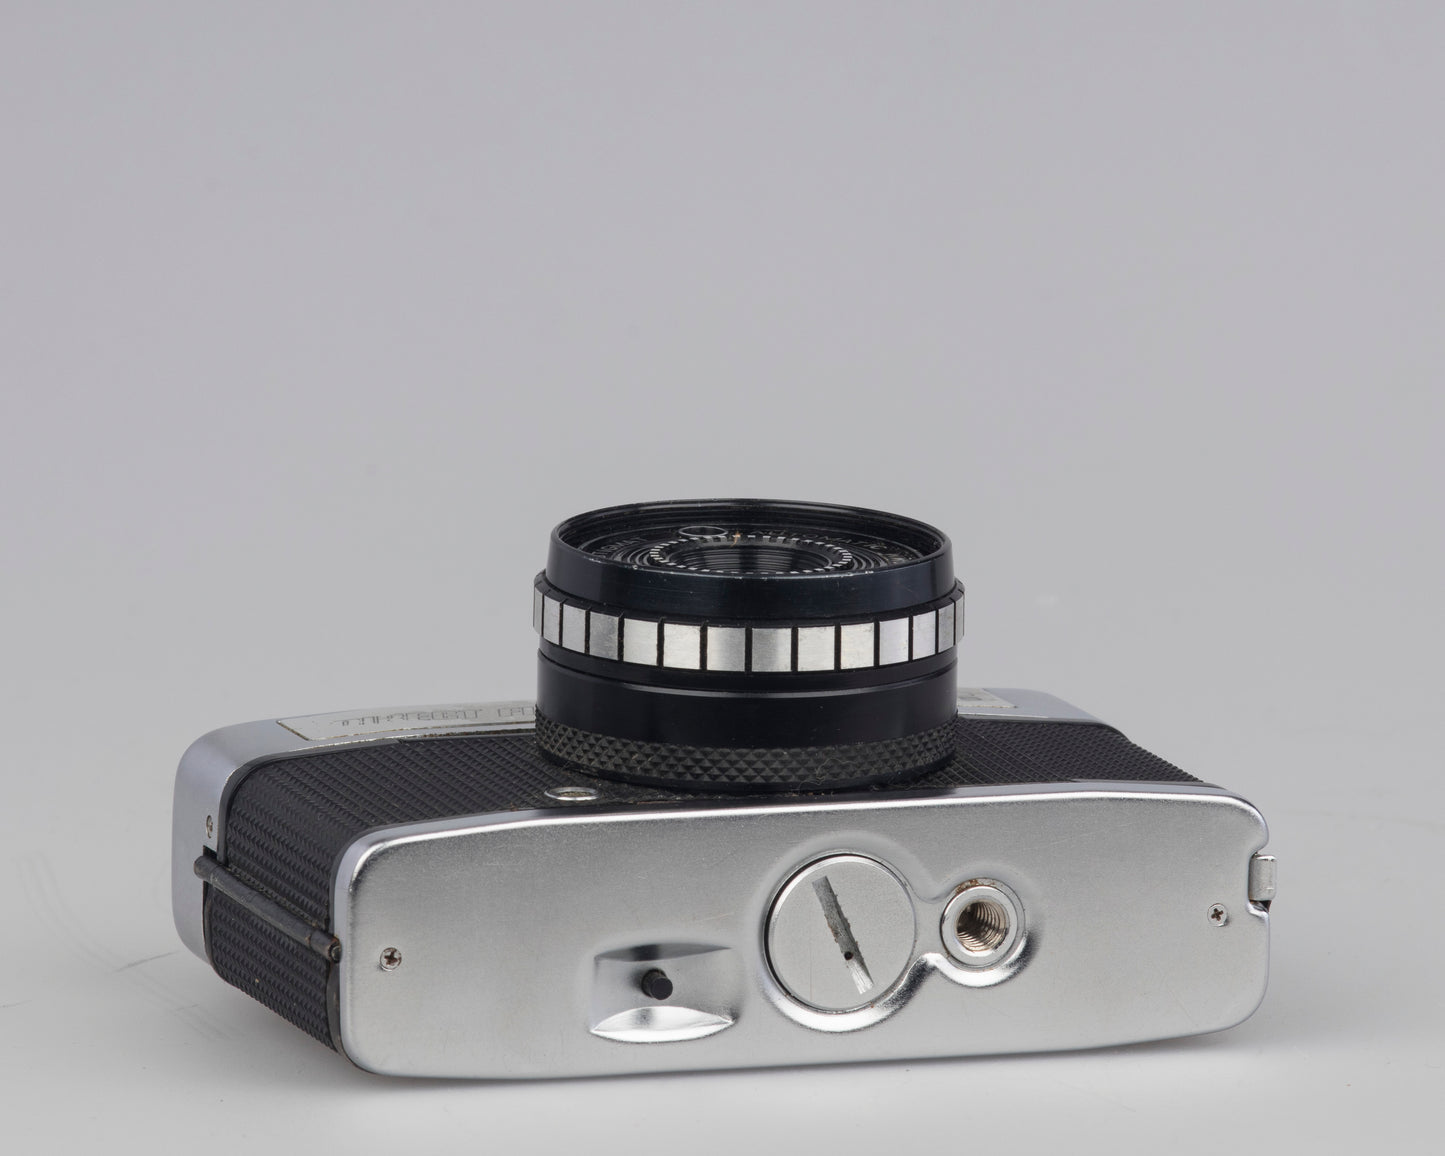 Direct Film CD35 (Halina 35-600) 35mm film camera w/50B flash